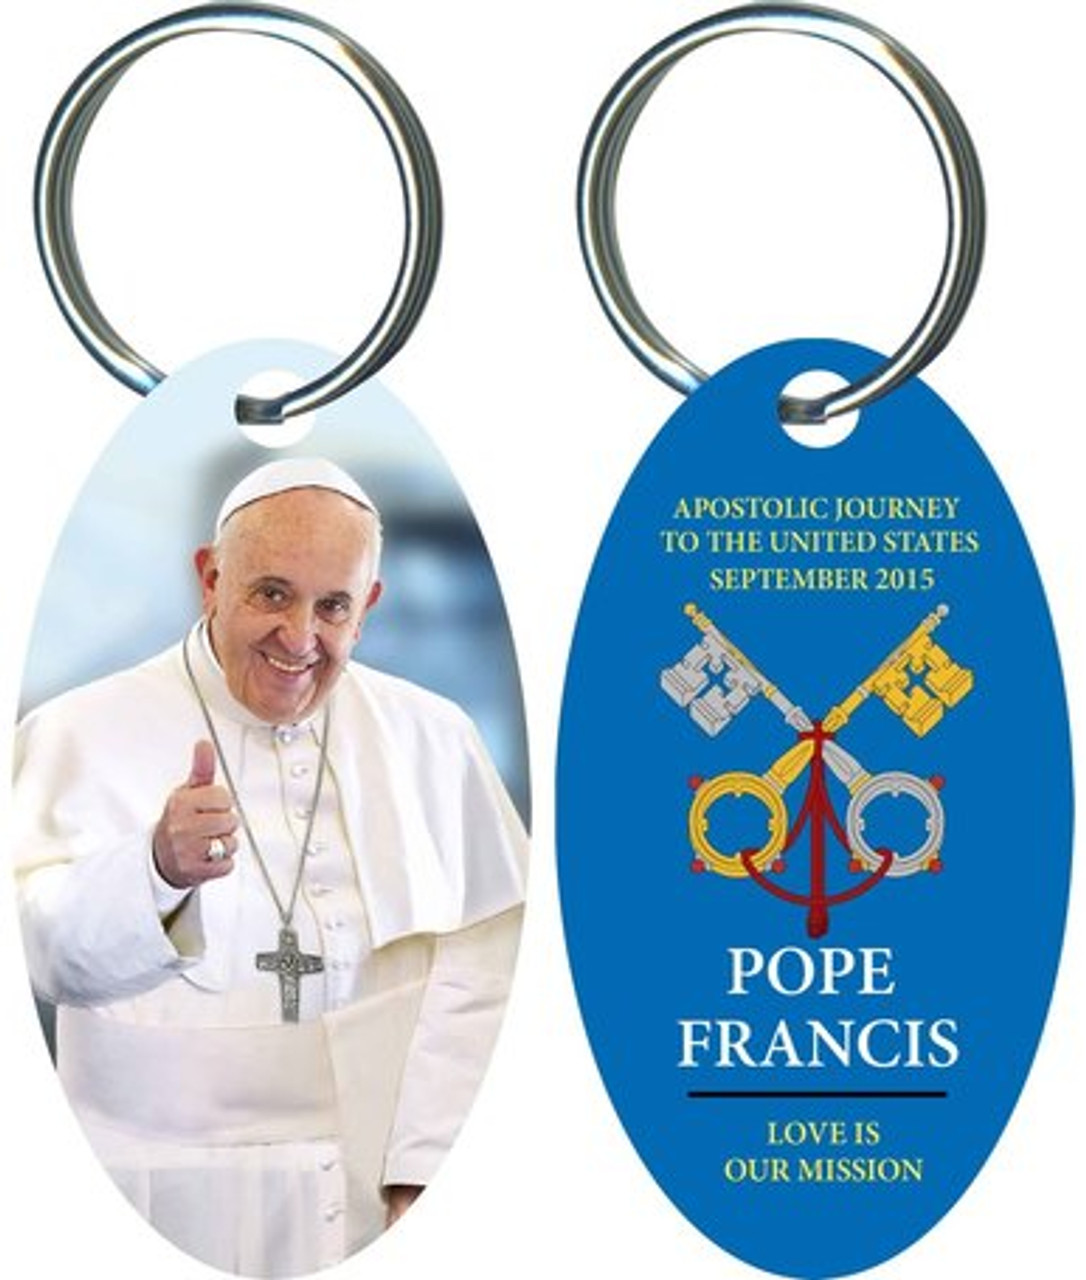 Pope Francis Thumbs Up Commemorative Apostolic Journey Keychain